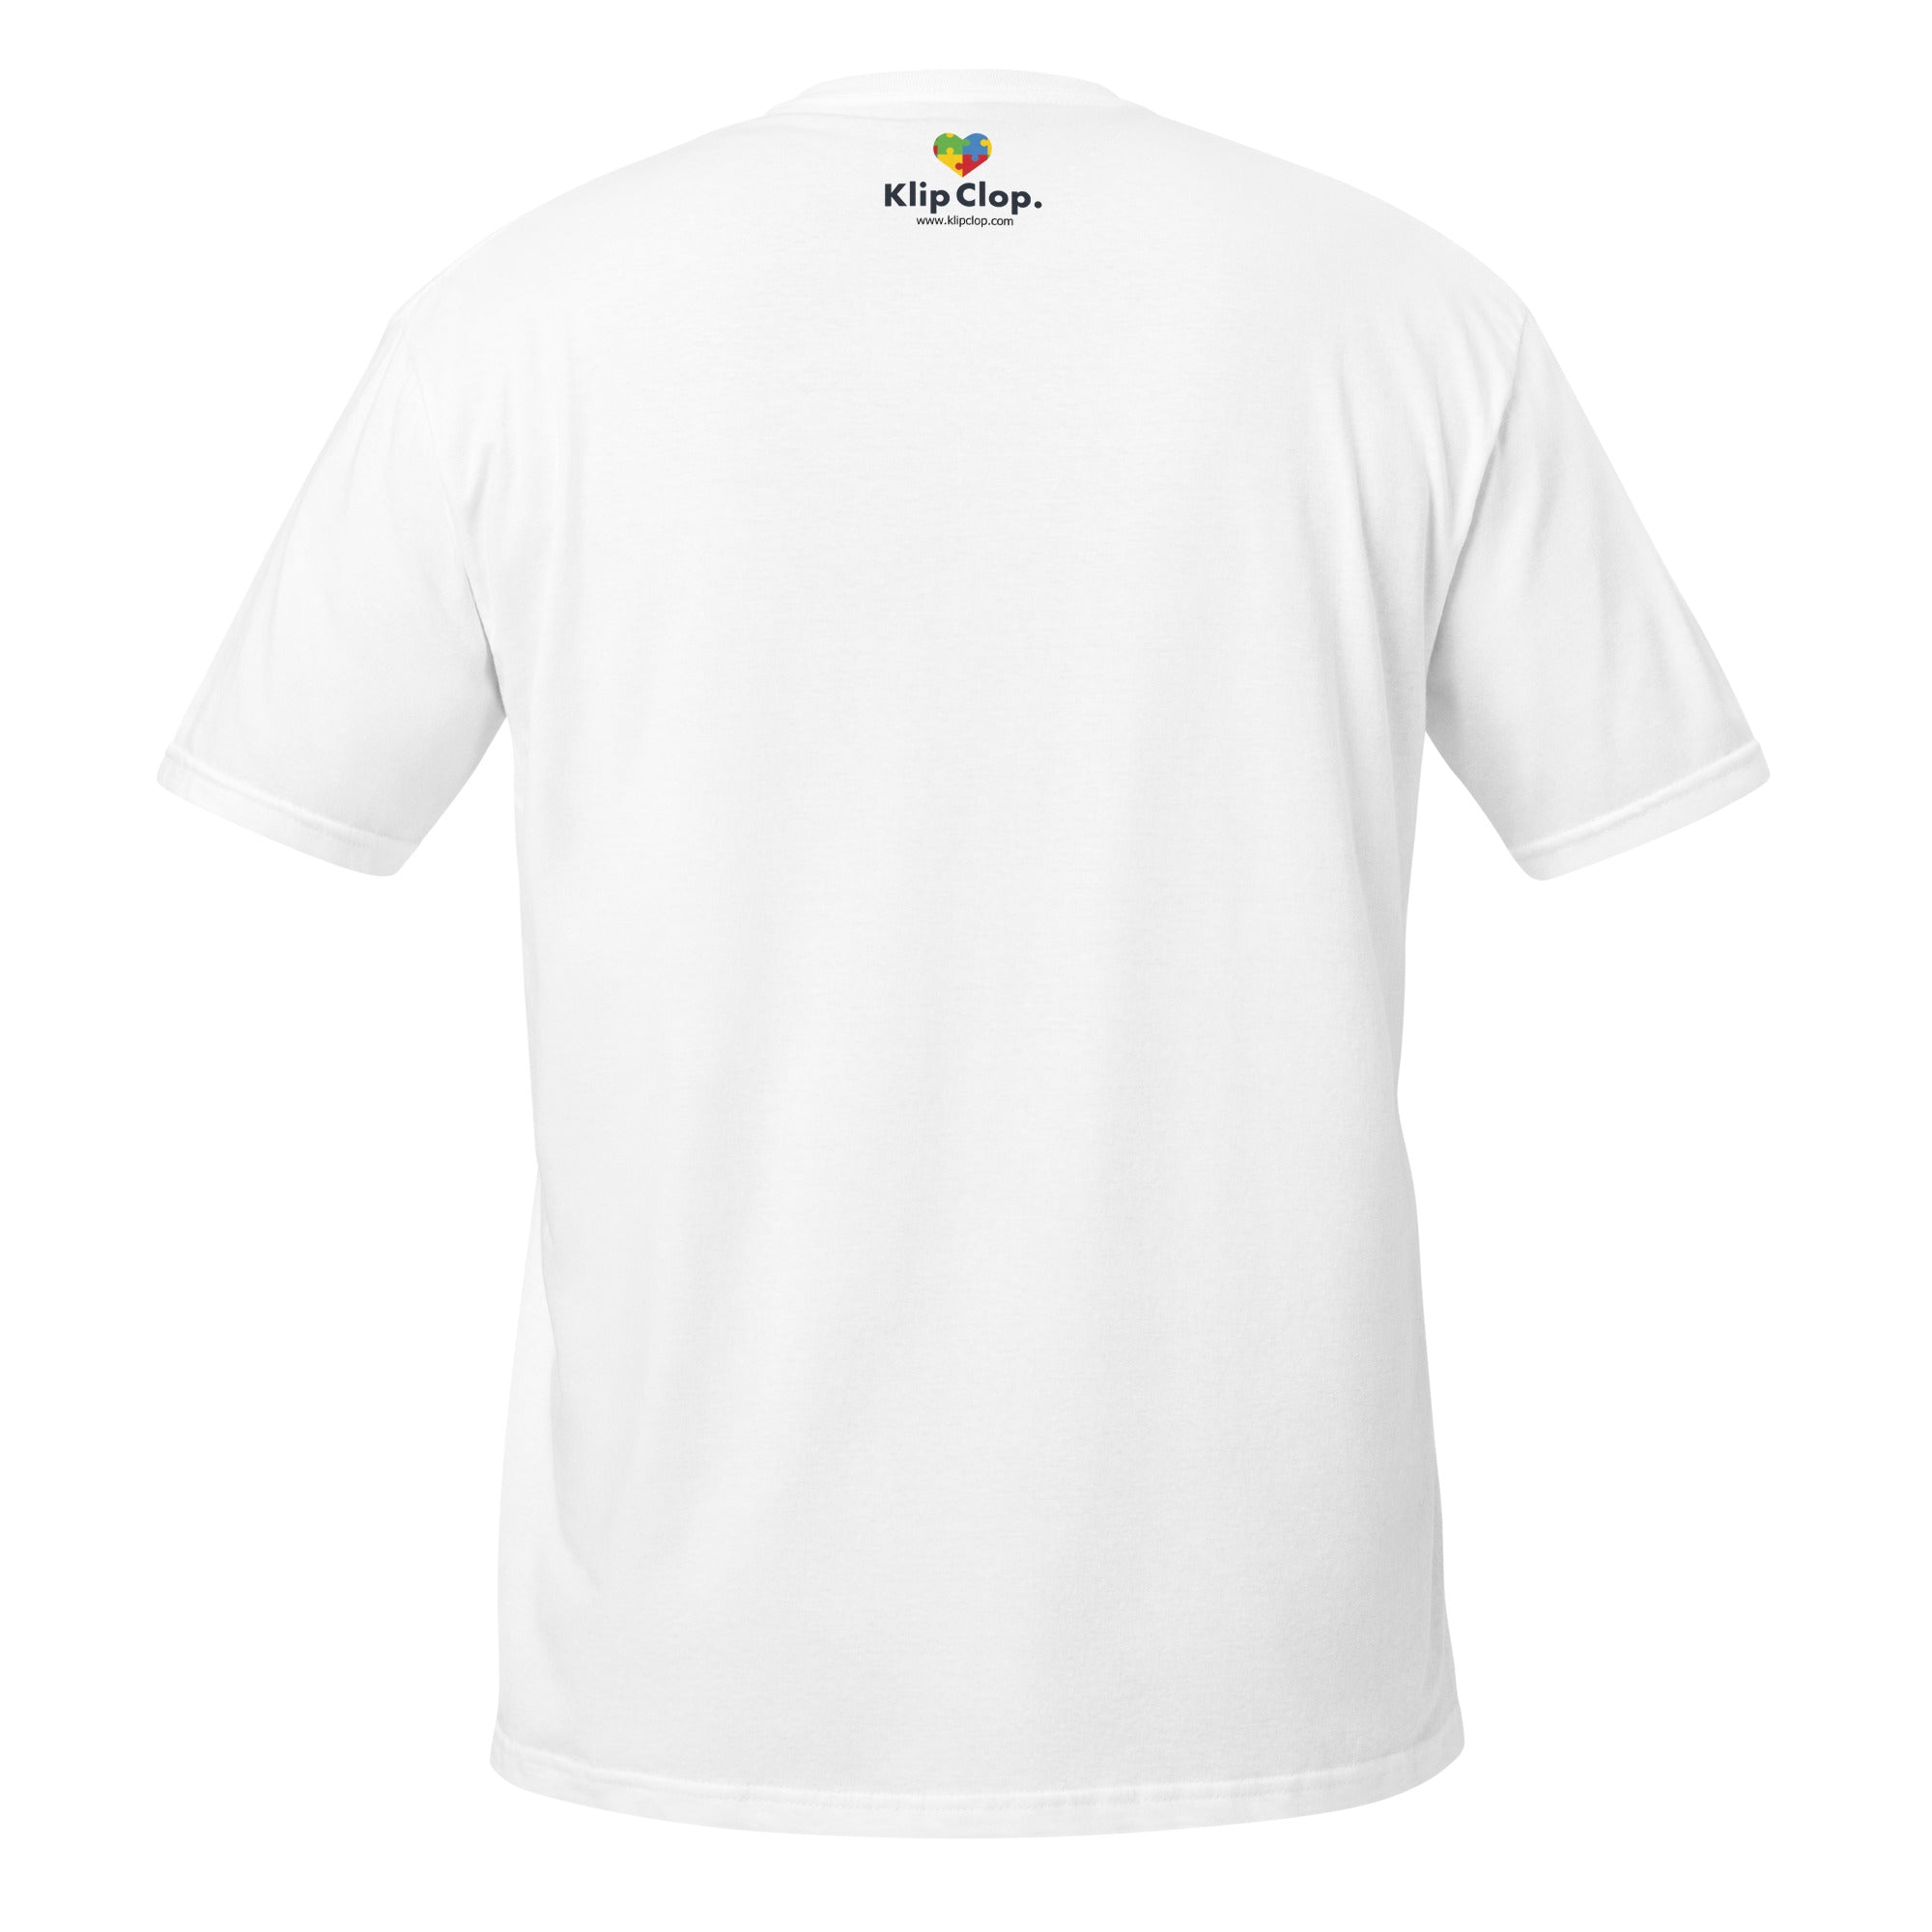 Short-Sleeve Unisex T-Shirt- Someone ausome has my heart